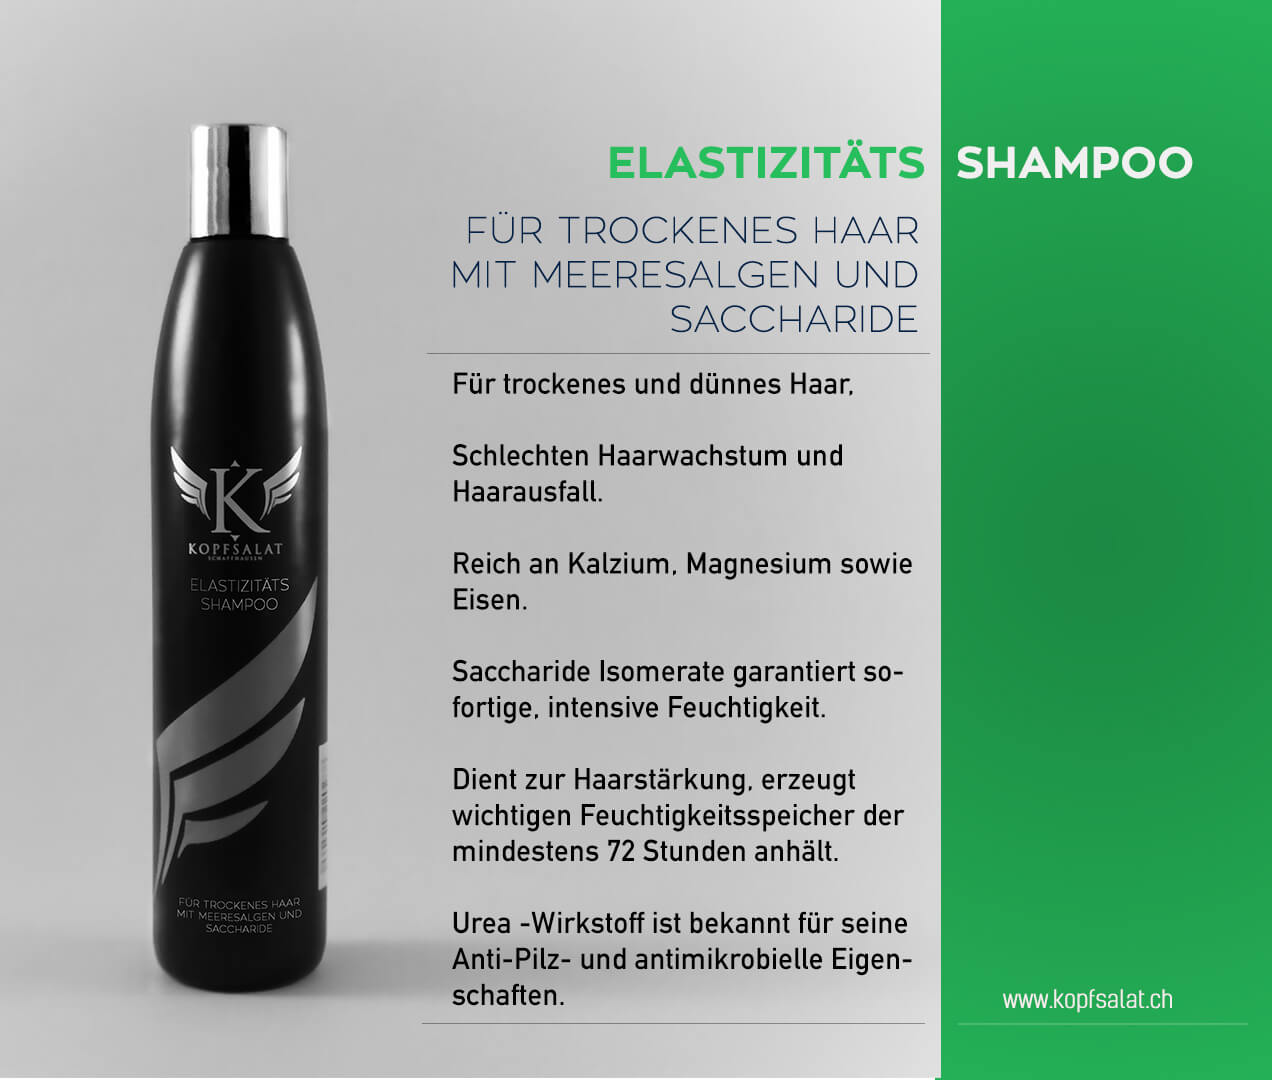 1 elastizitaets shampoo